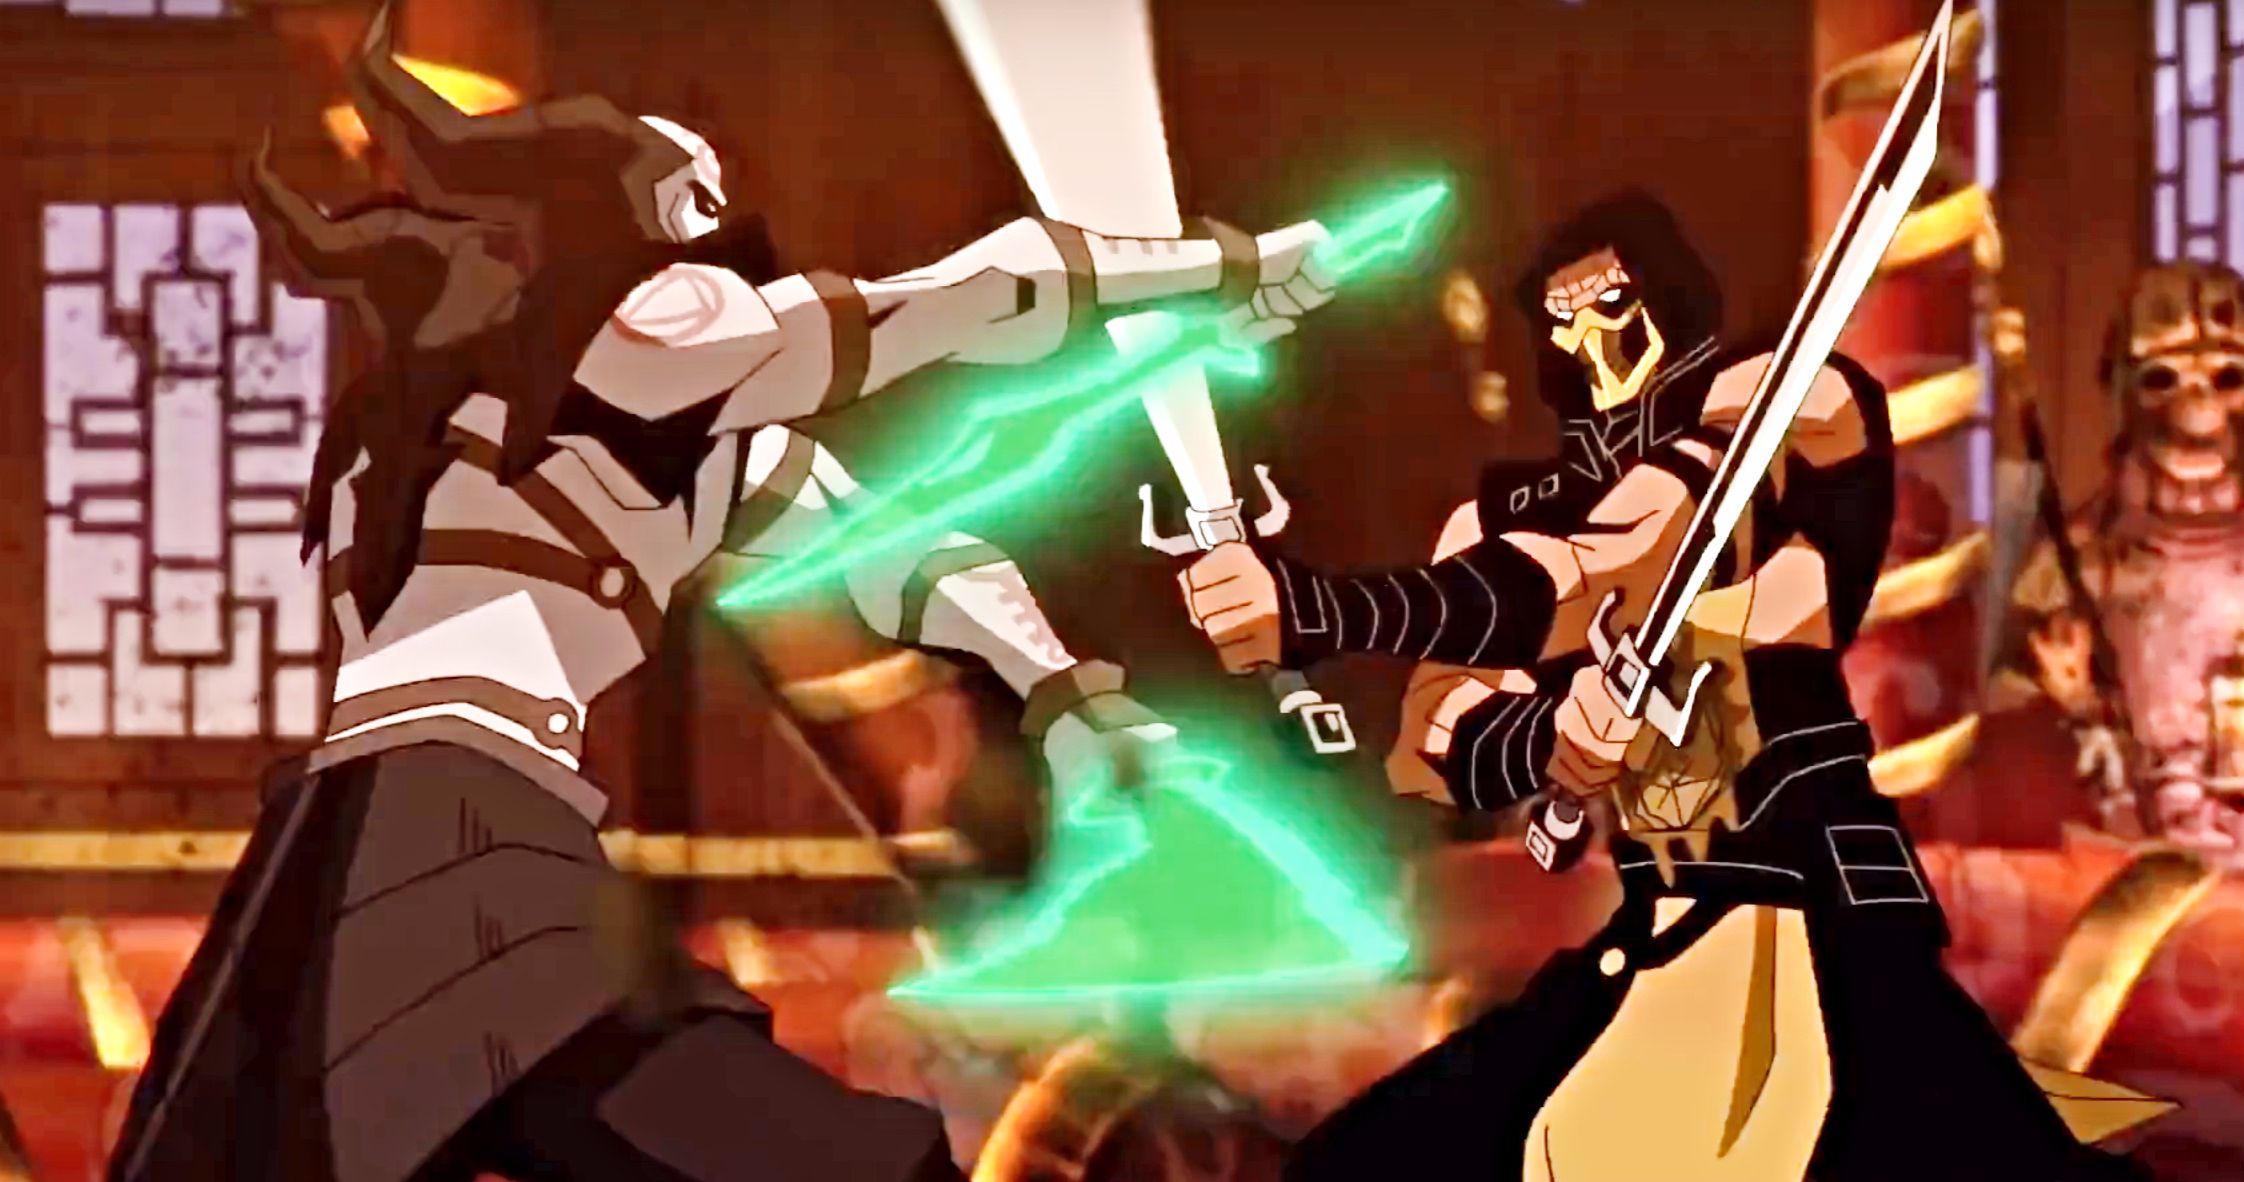 Mortal Kombat Legends: Scorpion's Revenge animation trailer